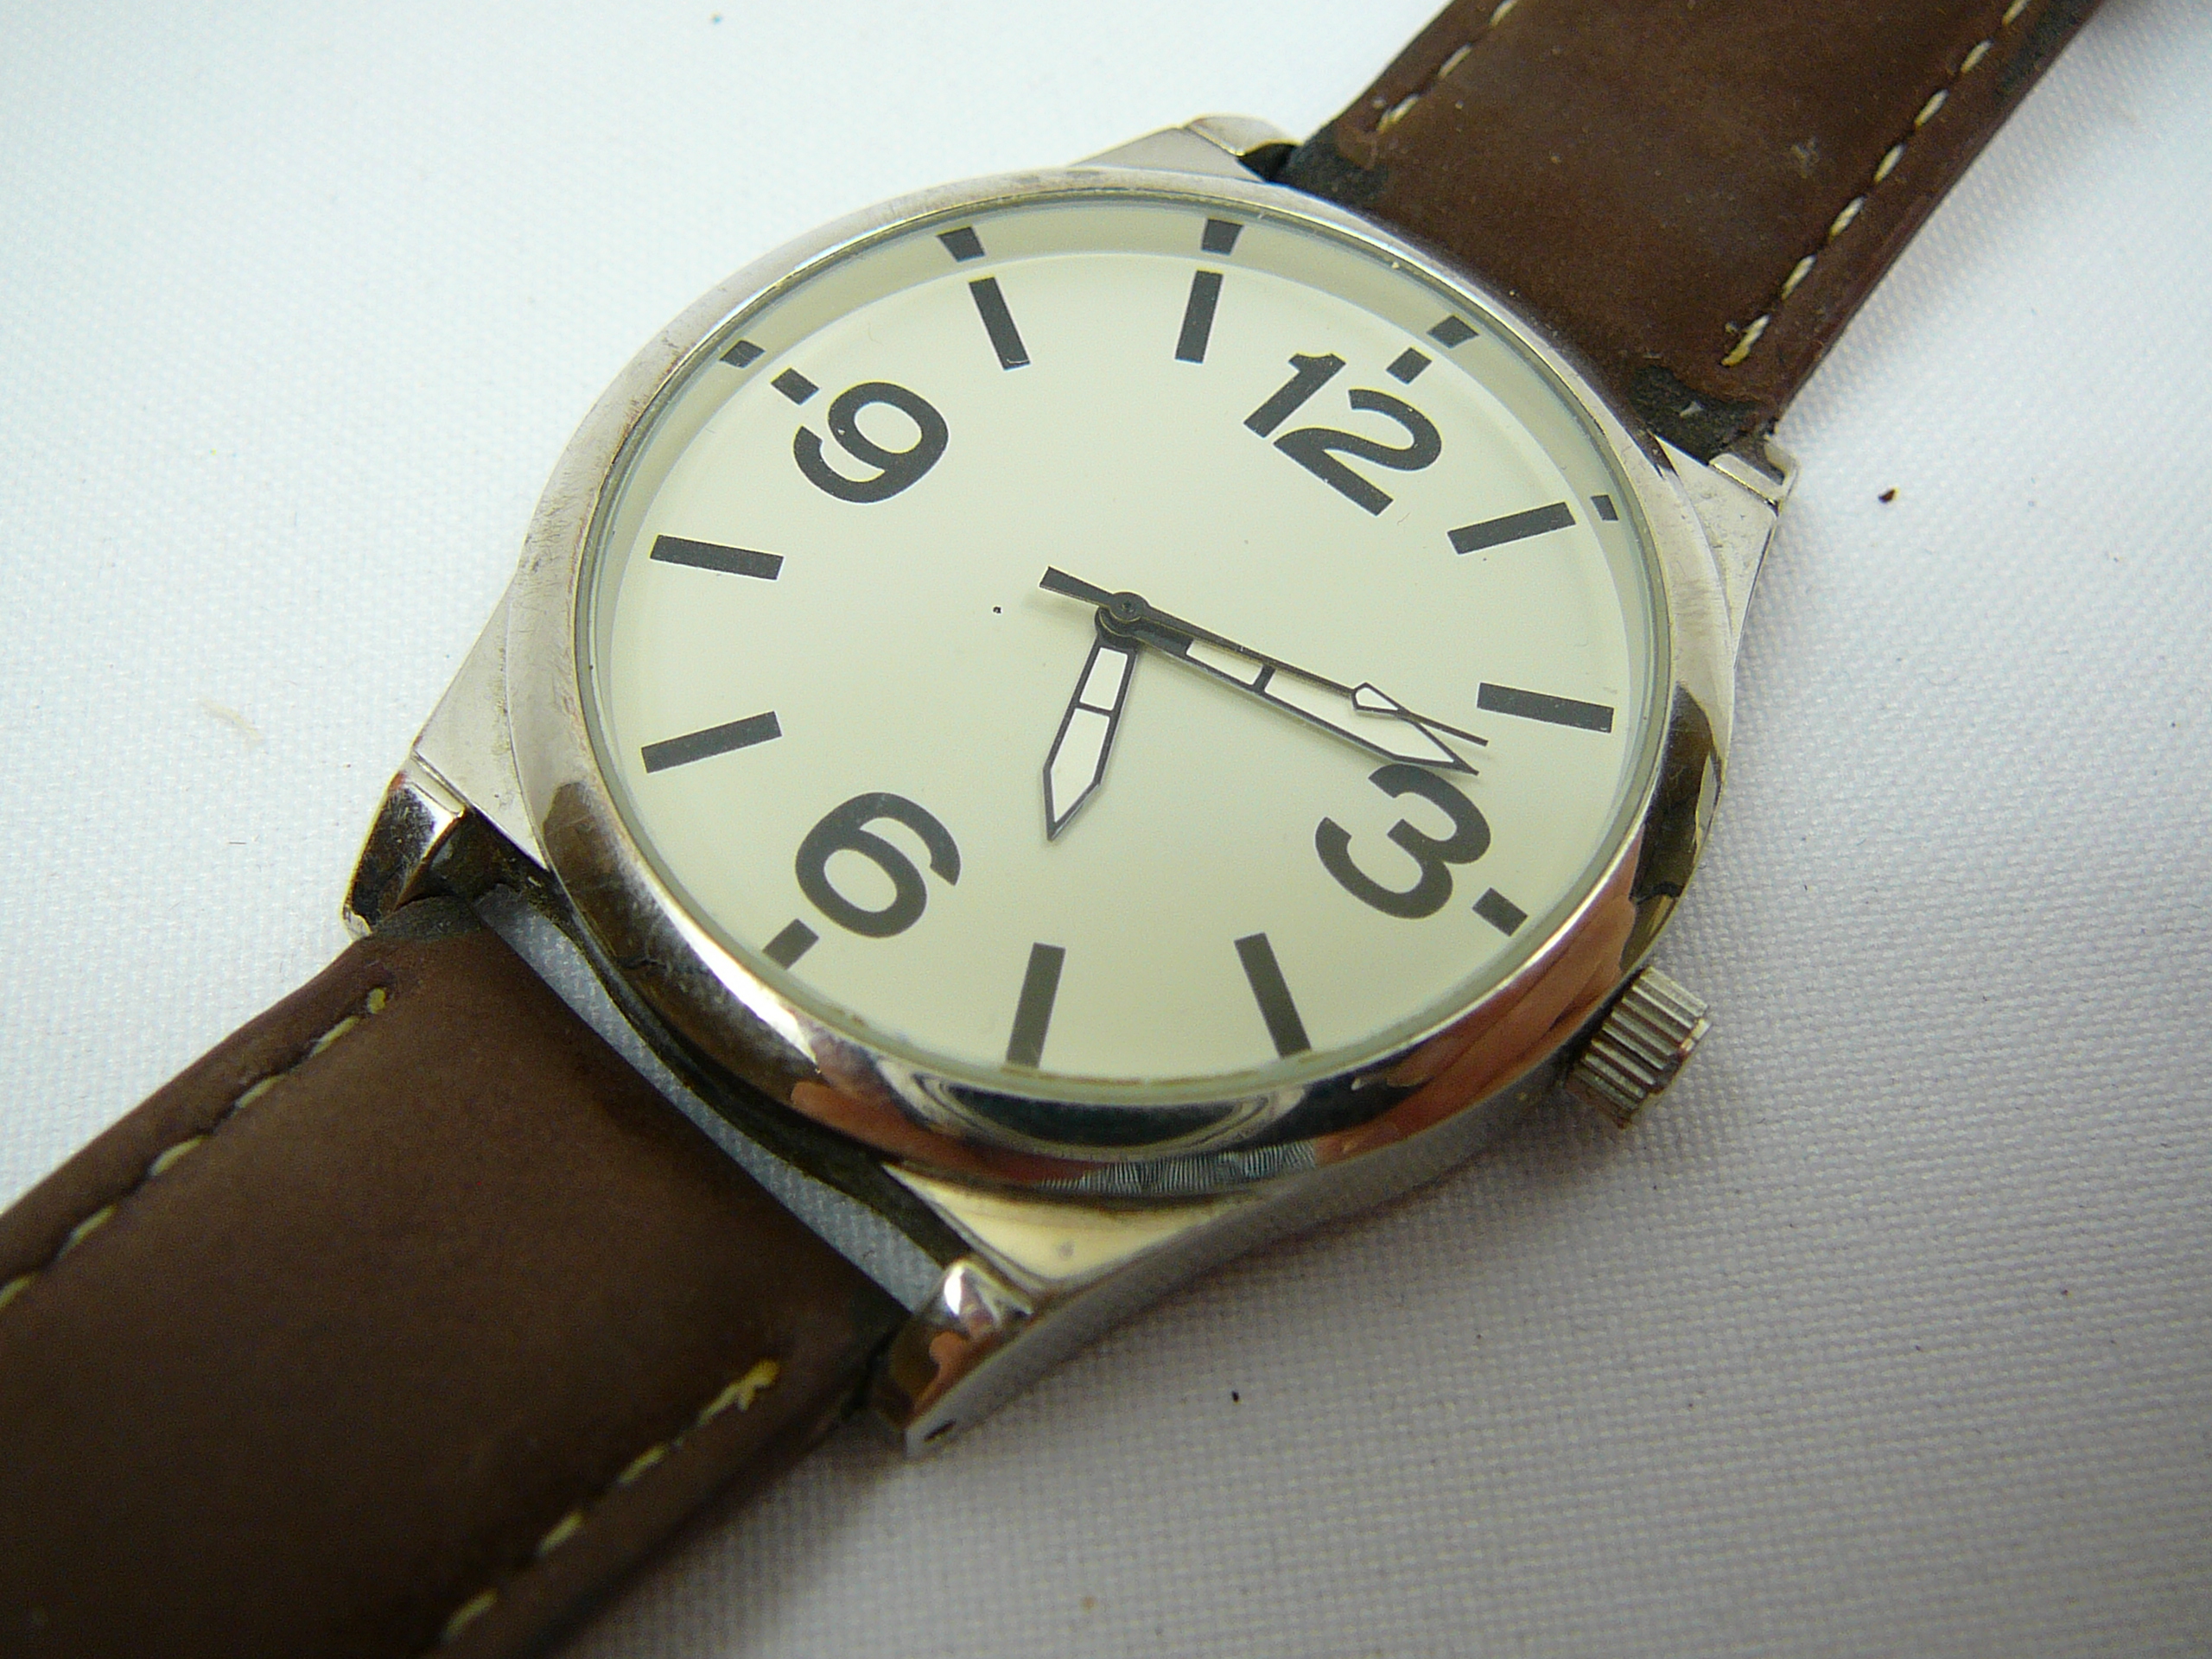 Modern quartz watch